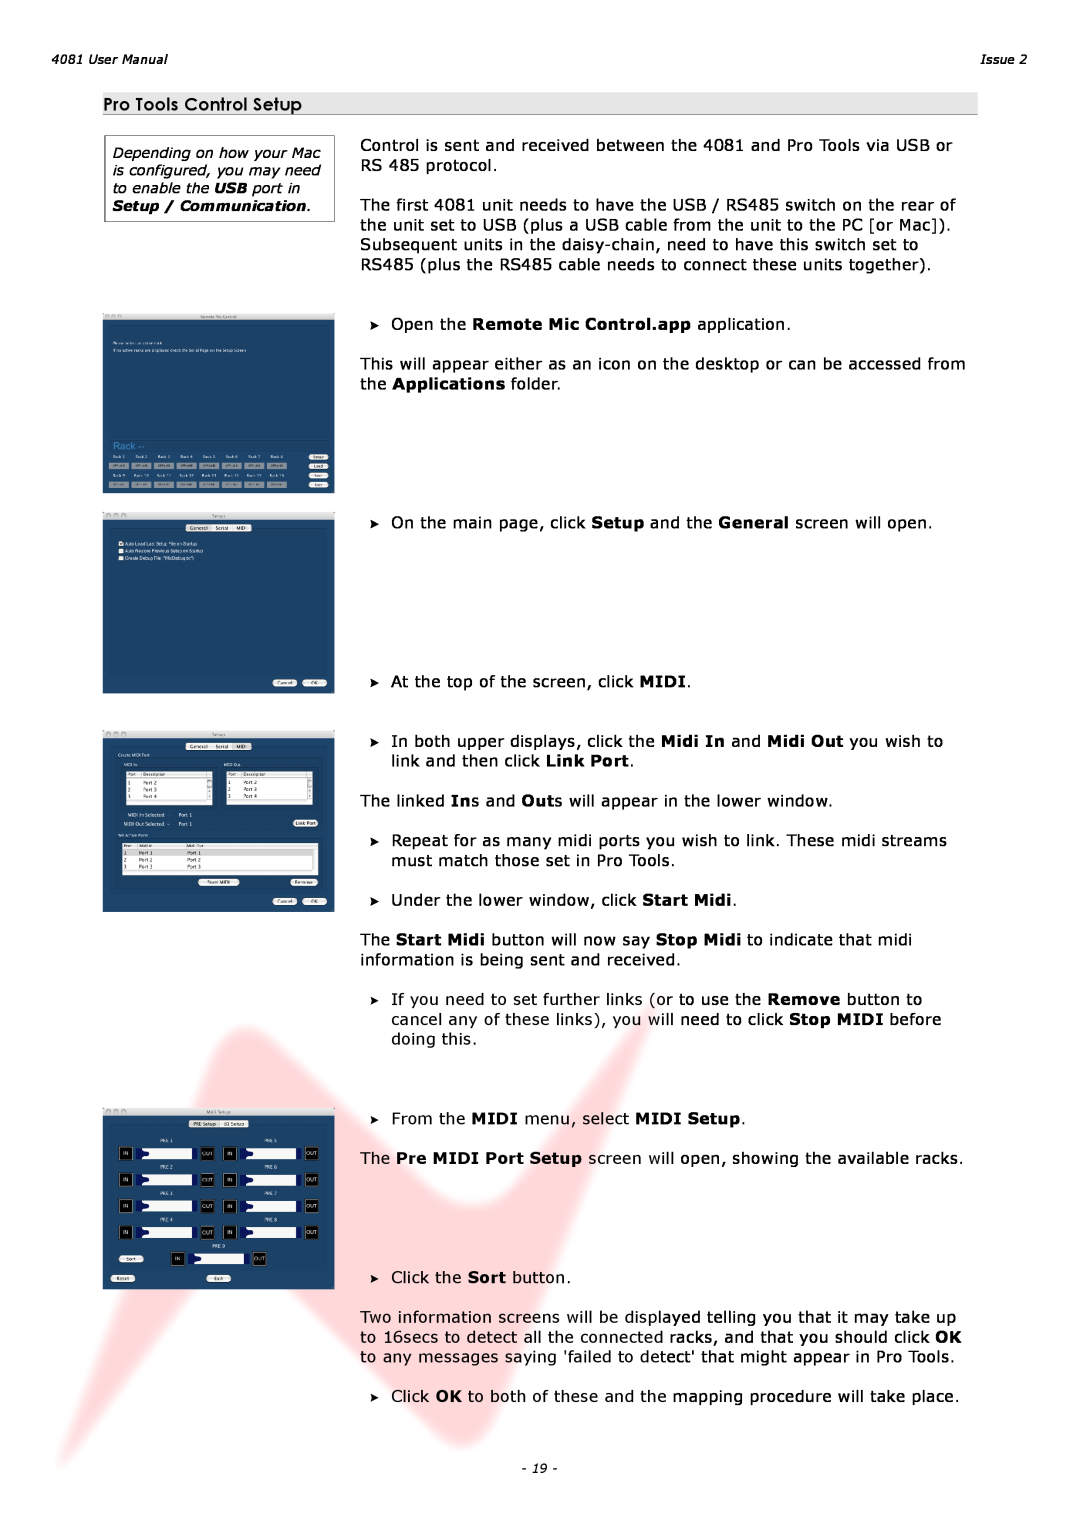 AMS 4081 user manual Pro Tools Control Setup 